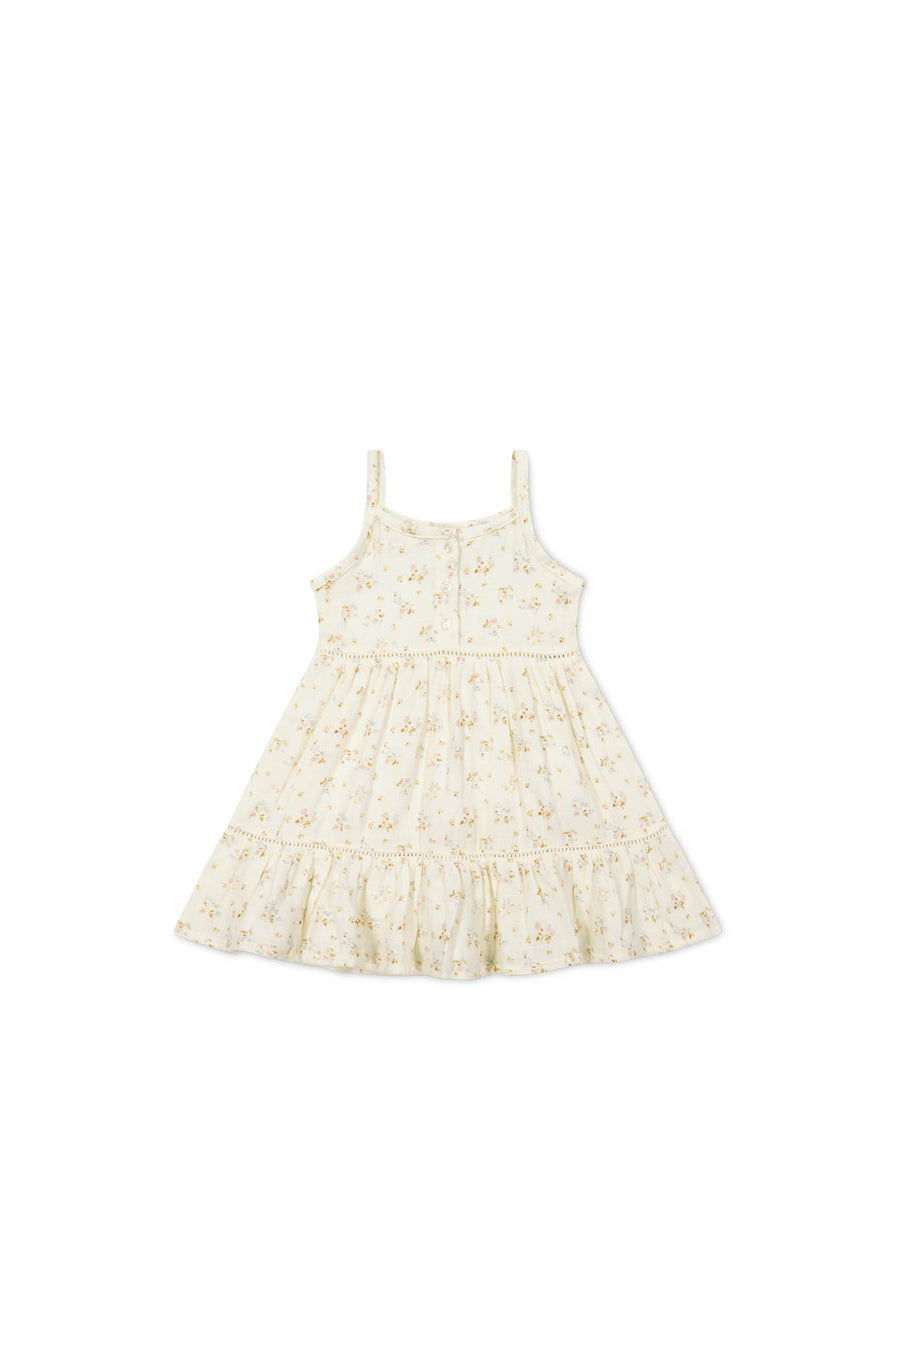 Organic Cotton Muslin Hazel Dress - Nina Watercolour Floral Childrens Dress from Jamie Kay NZ